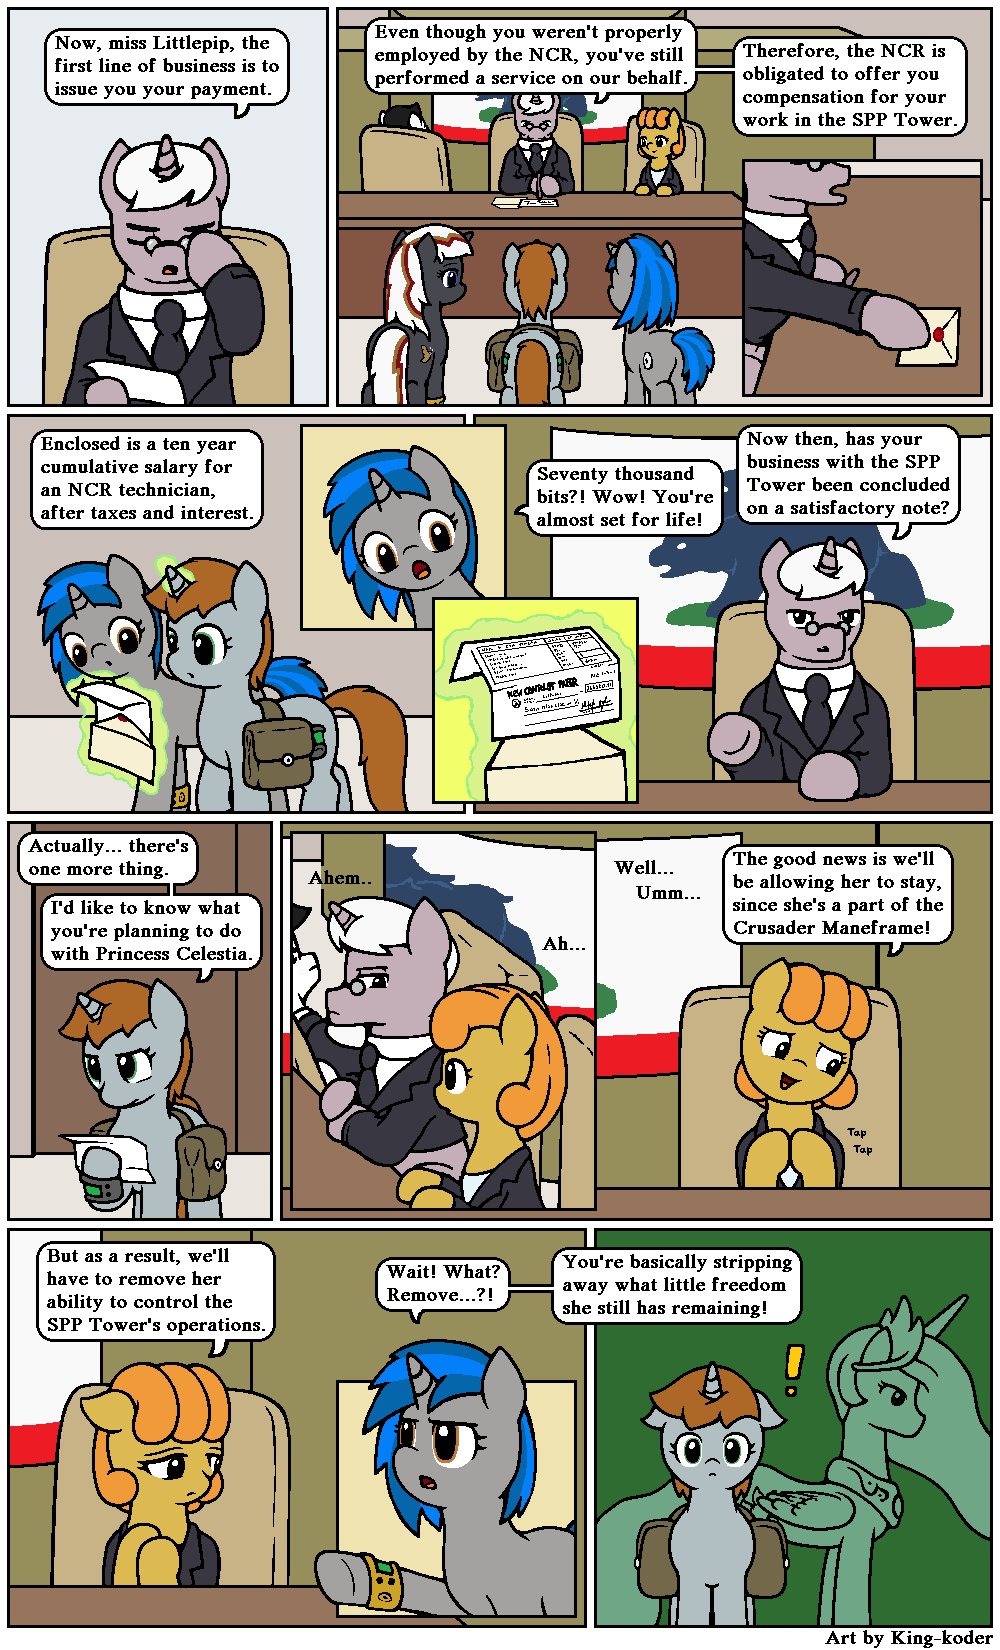 Post-Fallout Equestria : Episode2 Page9